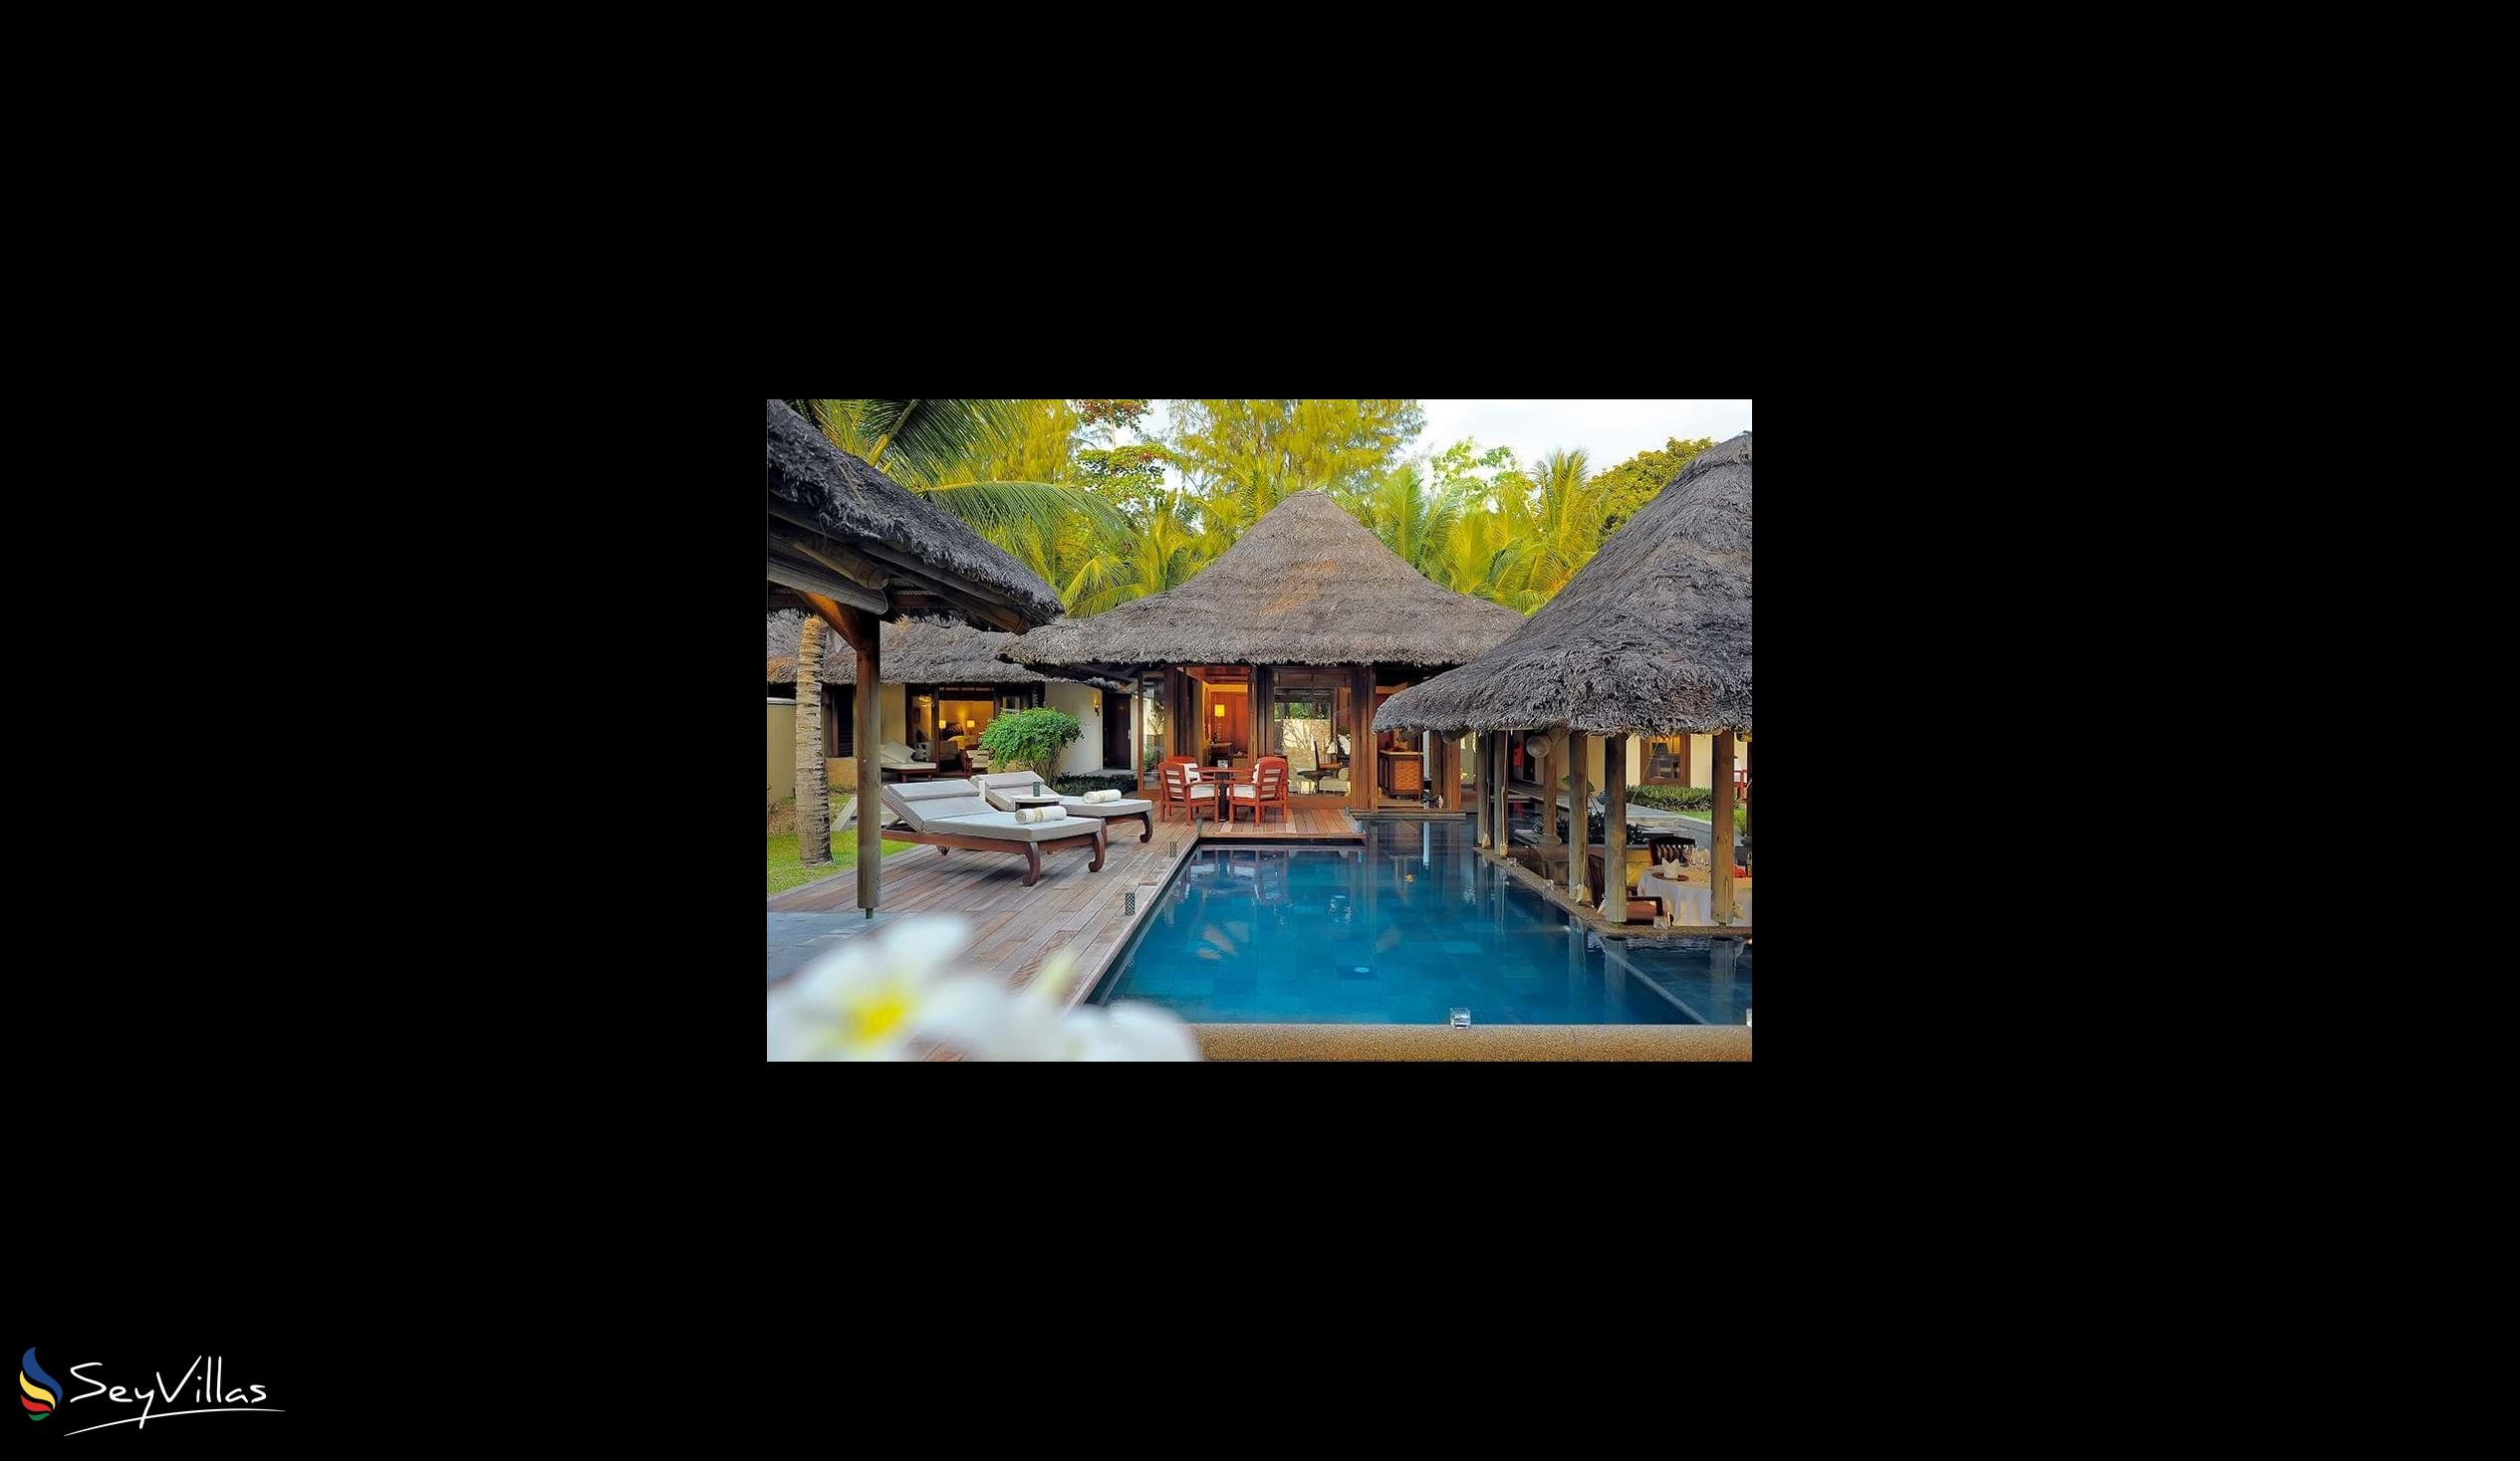 Photo 144: Constance Lémuria Seychelles - 2-Bedroom Pool Villa - Praslin (Seychelles)